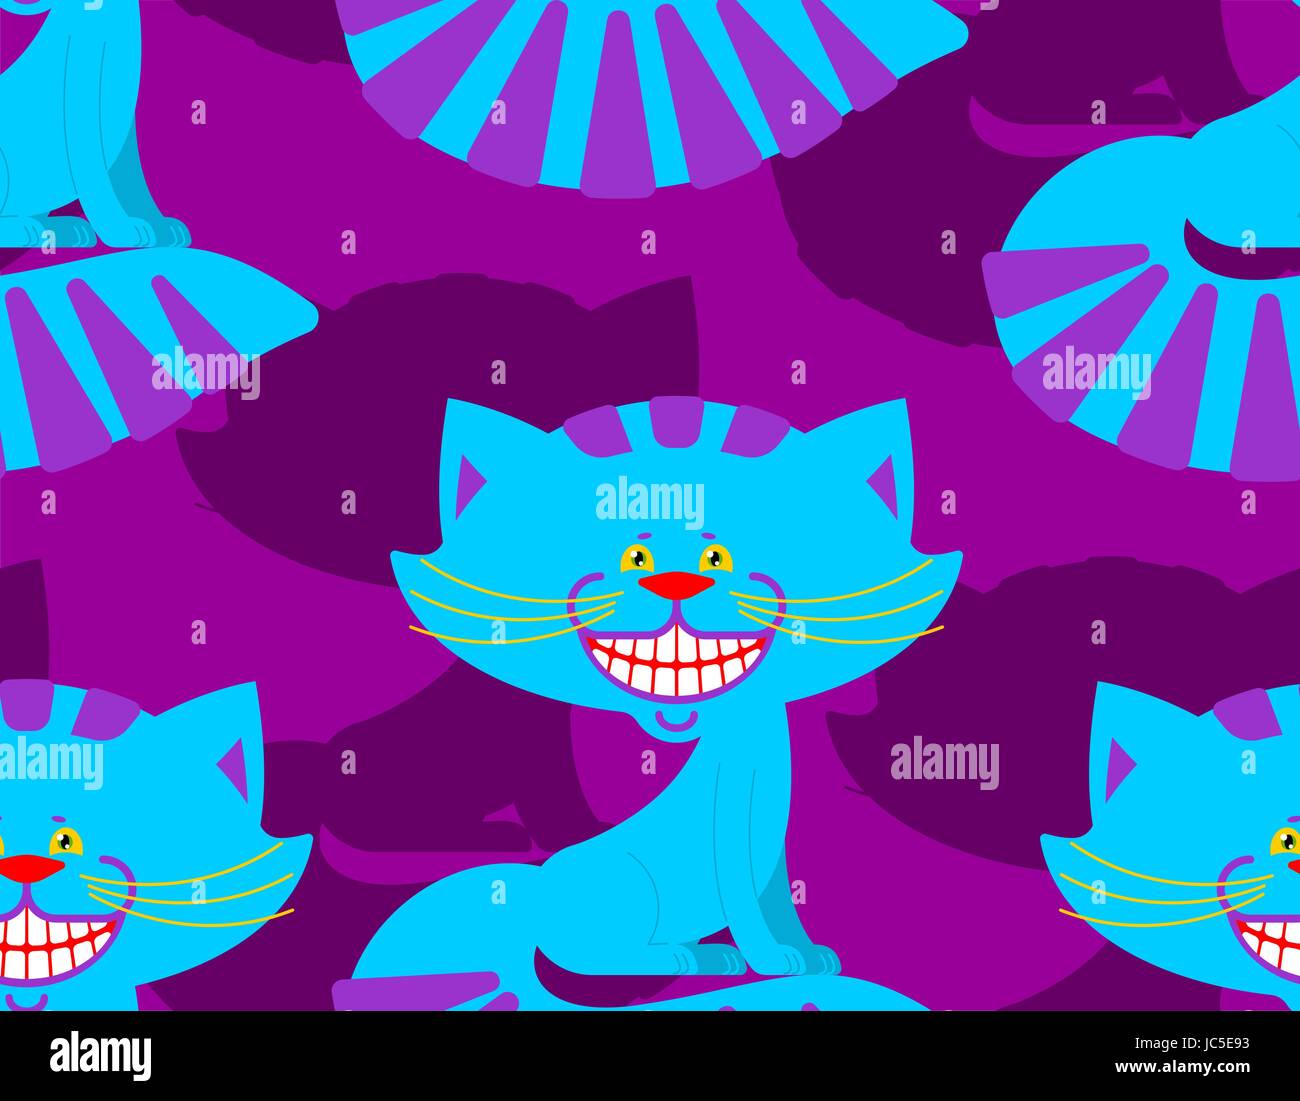 Cheshire cat smile pattern. texture Fantastic pet alice in wonderland. Magic animal background Stock Vector